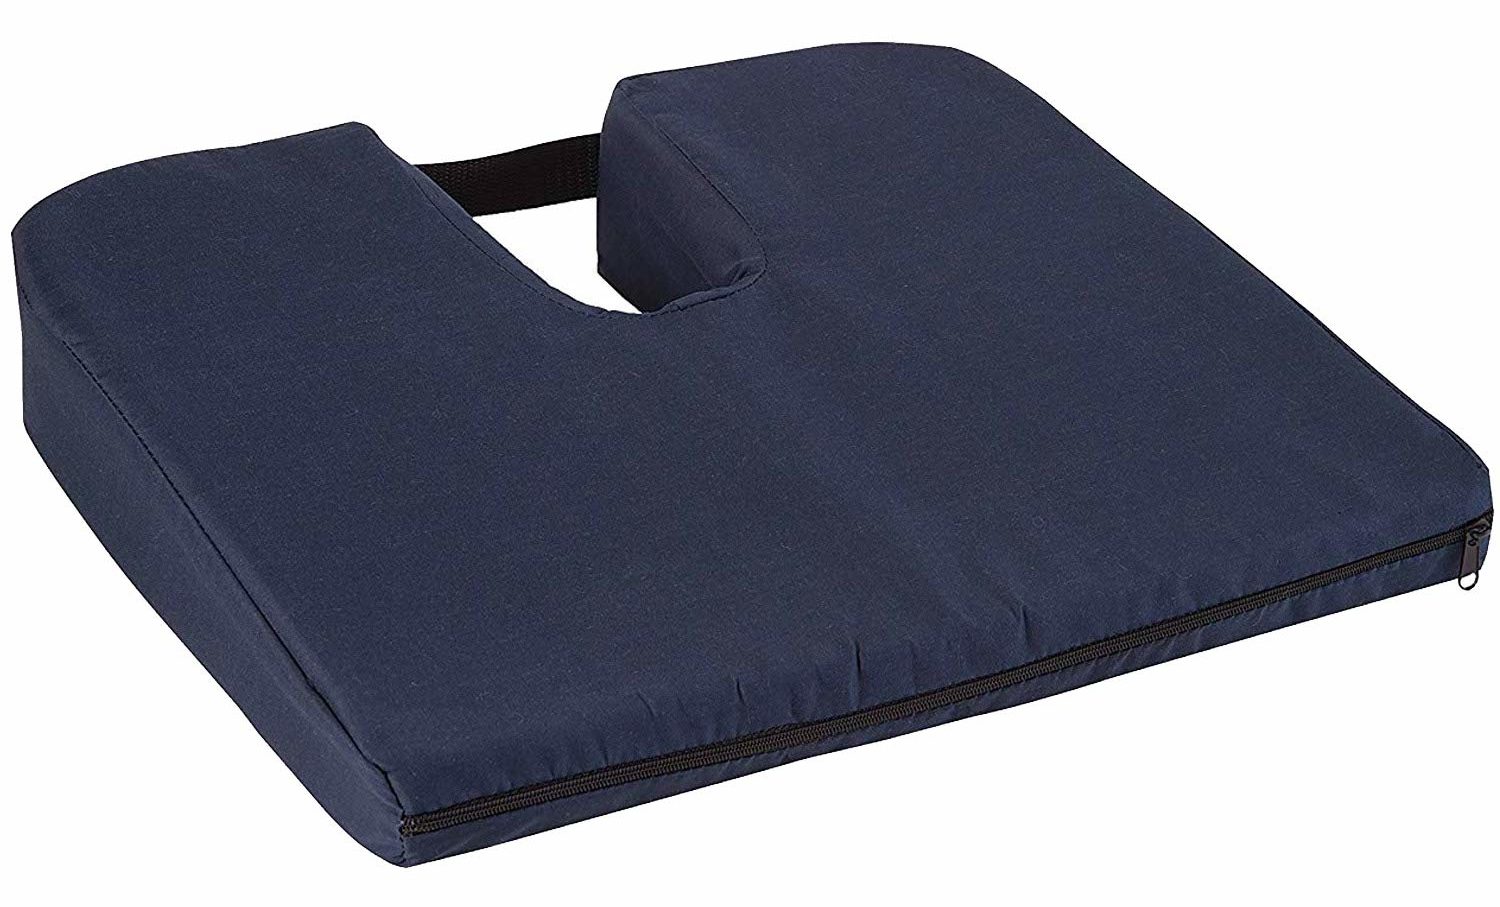 Coccyx cushion for arthritis pain.